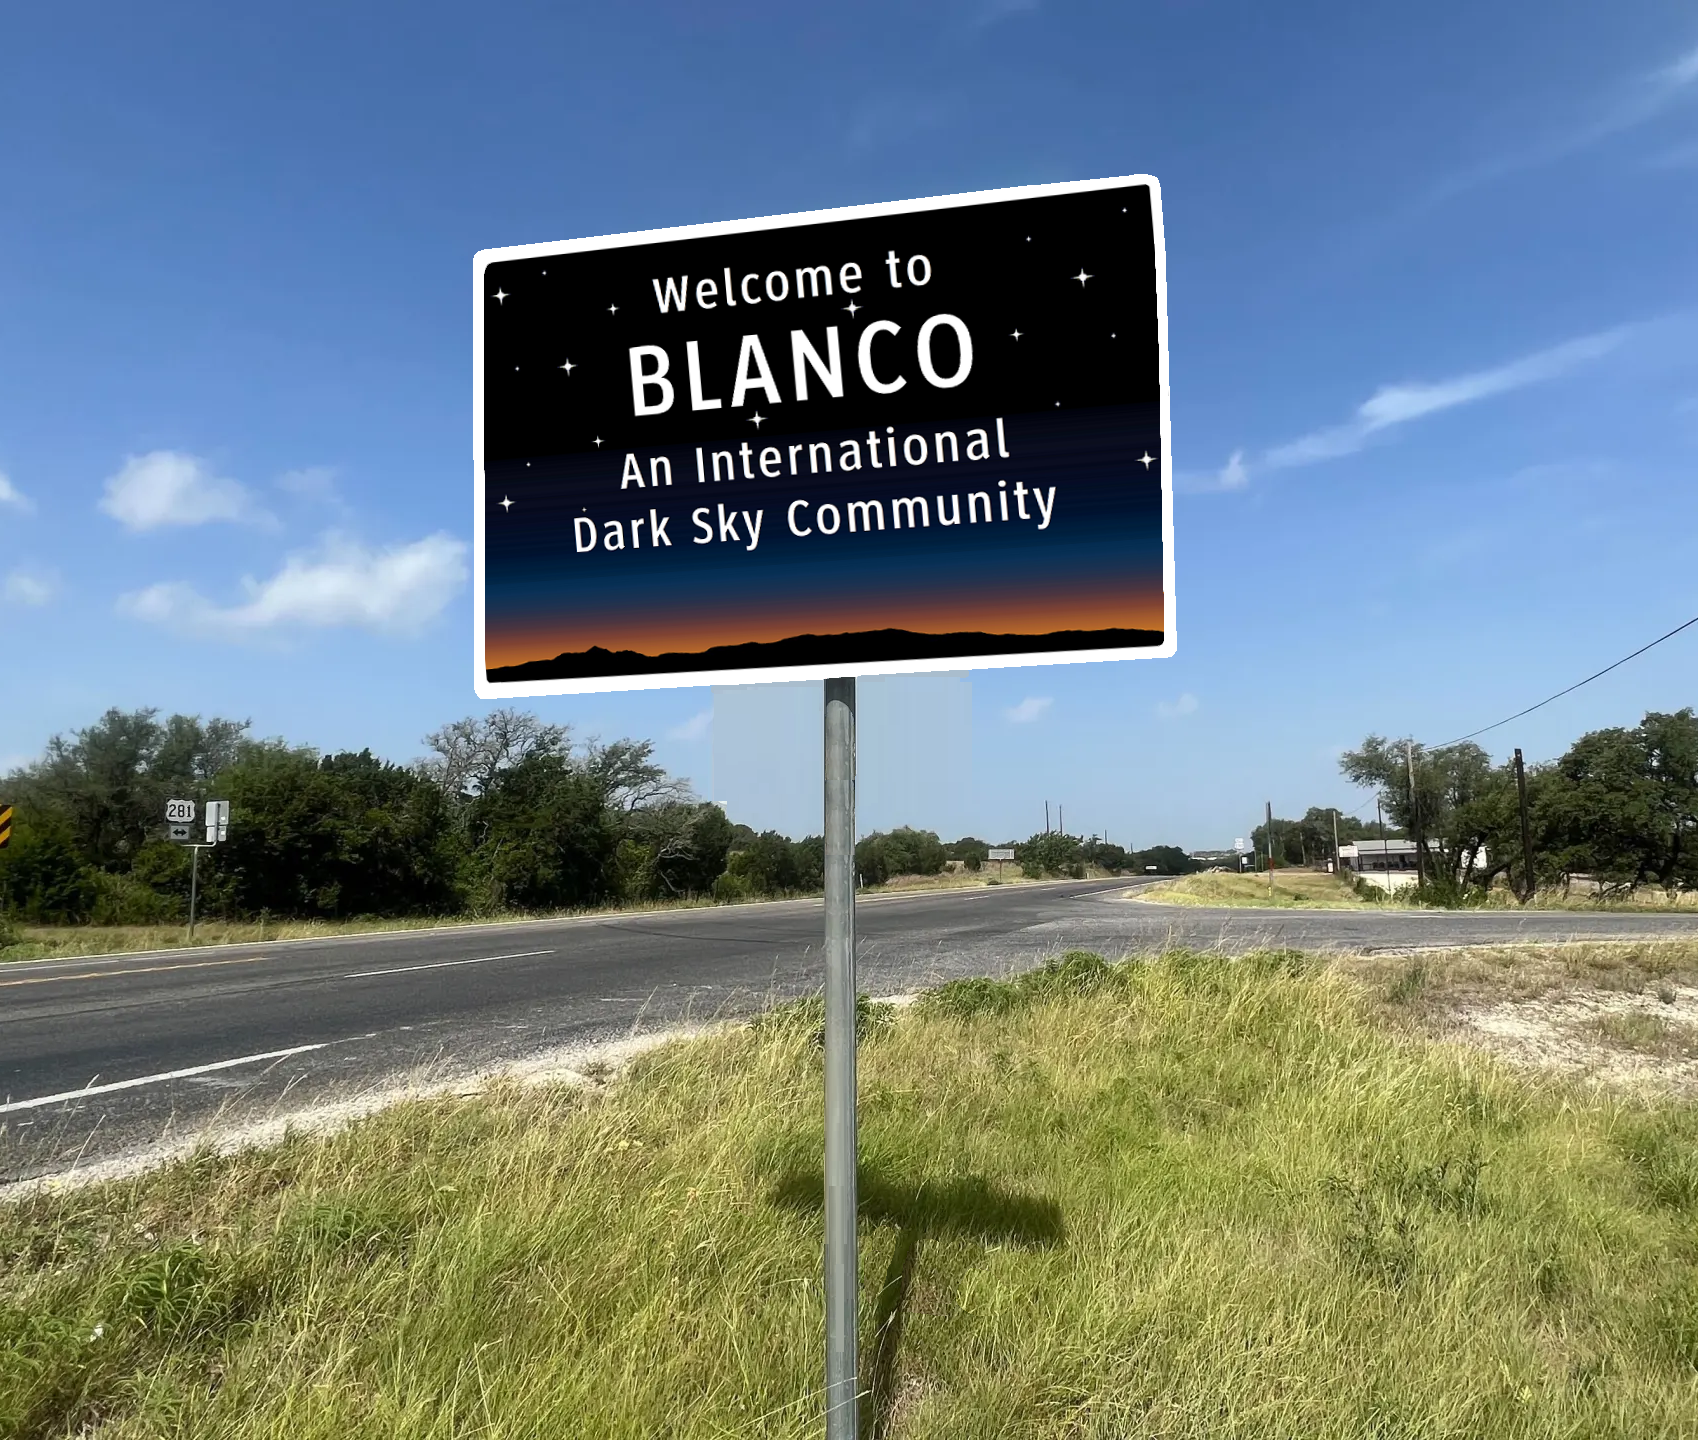 City of Blanco, Texas (U.S.) Becomes Sixth International Dark Sky Community  in Texas